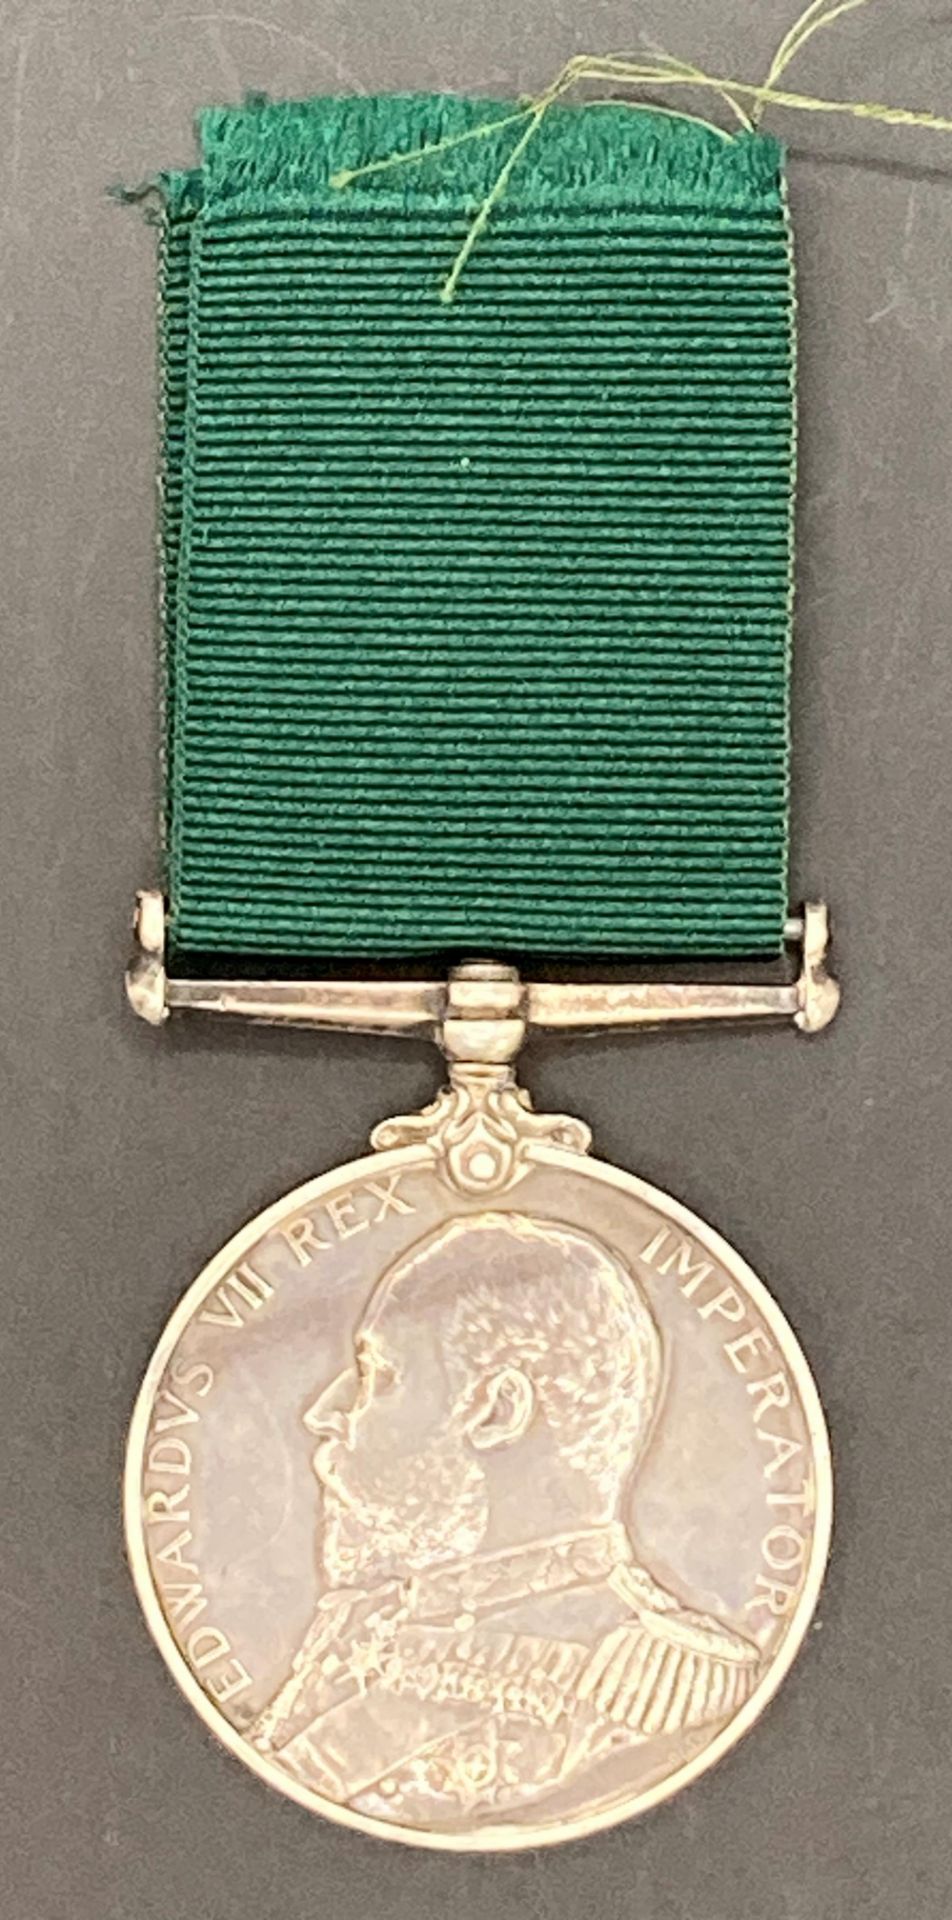 Royal Navy Reserve Long Service Medal (Edward VII) to D.1137 H.S.